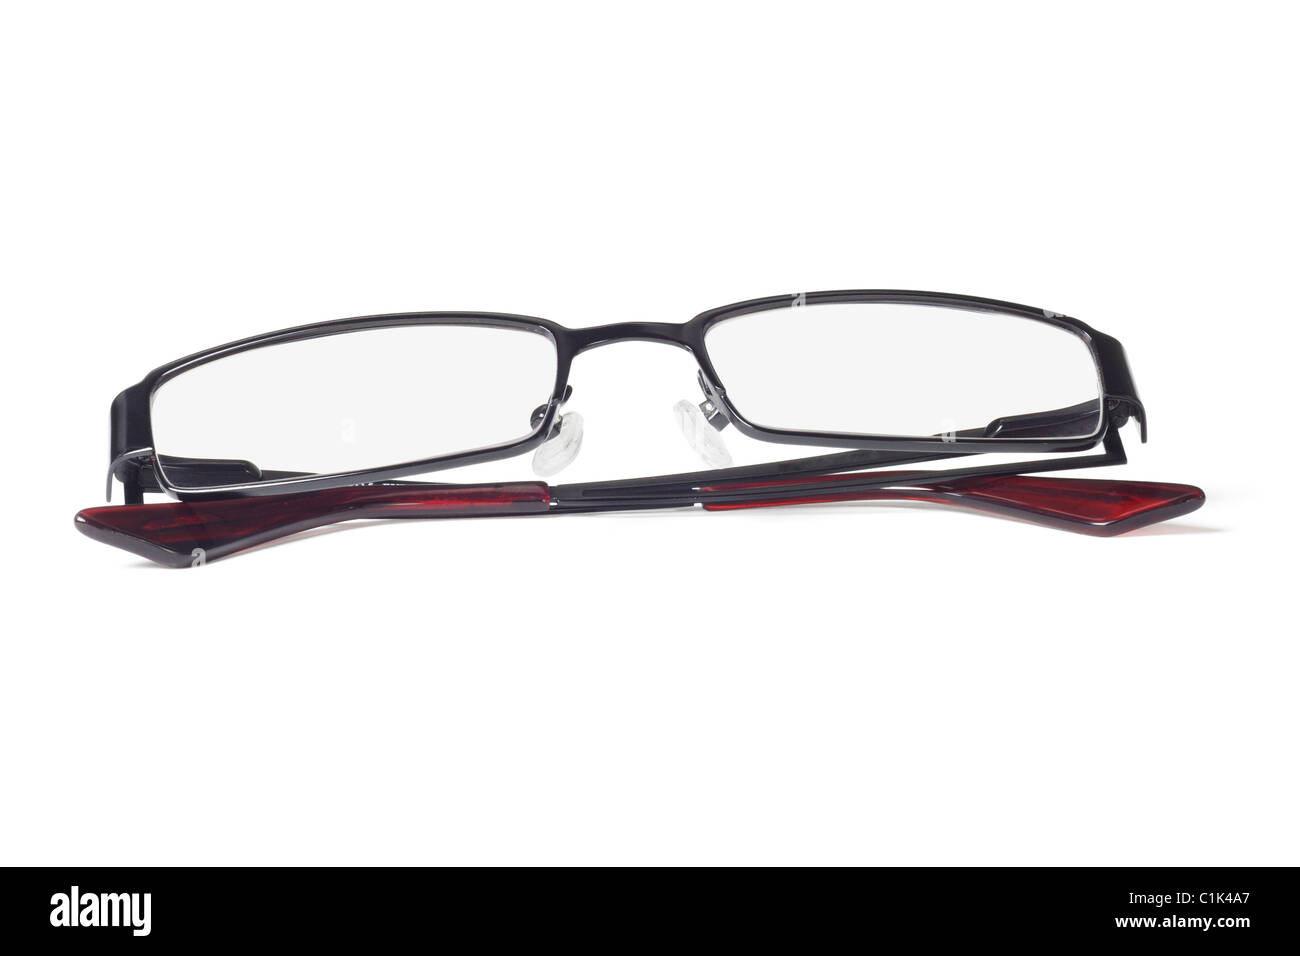 Fashionable metal frame eyeglasses on white background Stock Photo